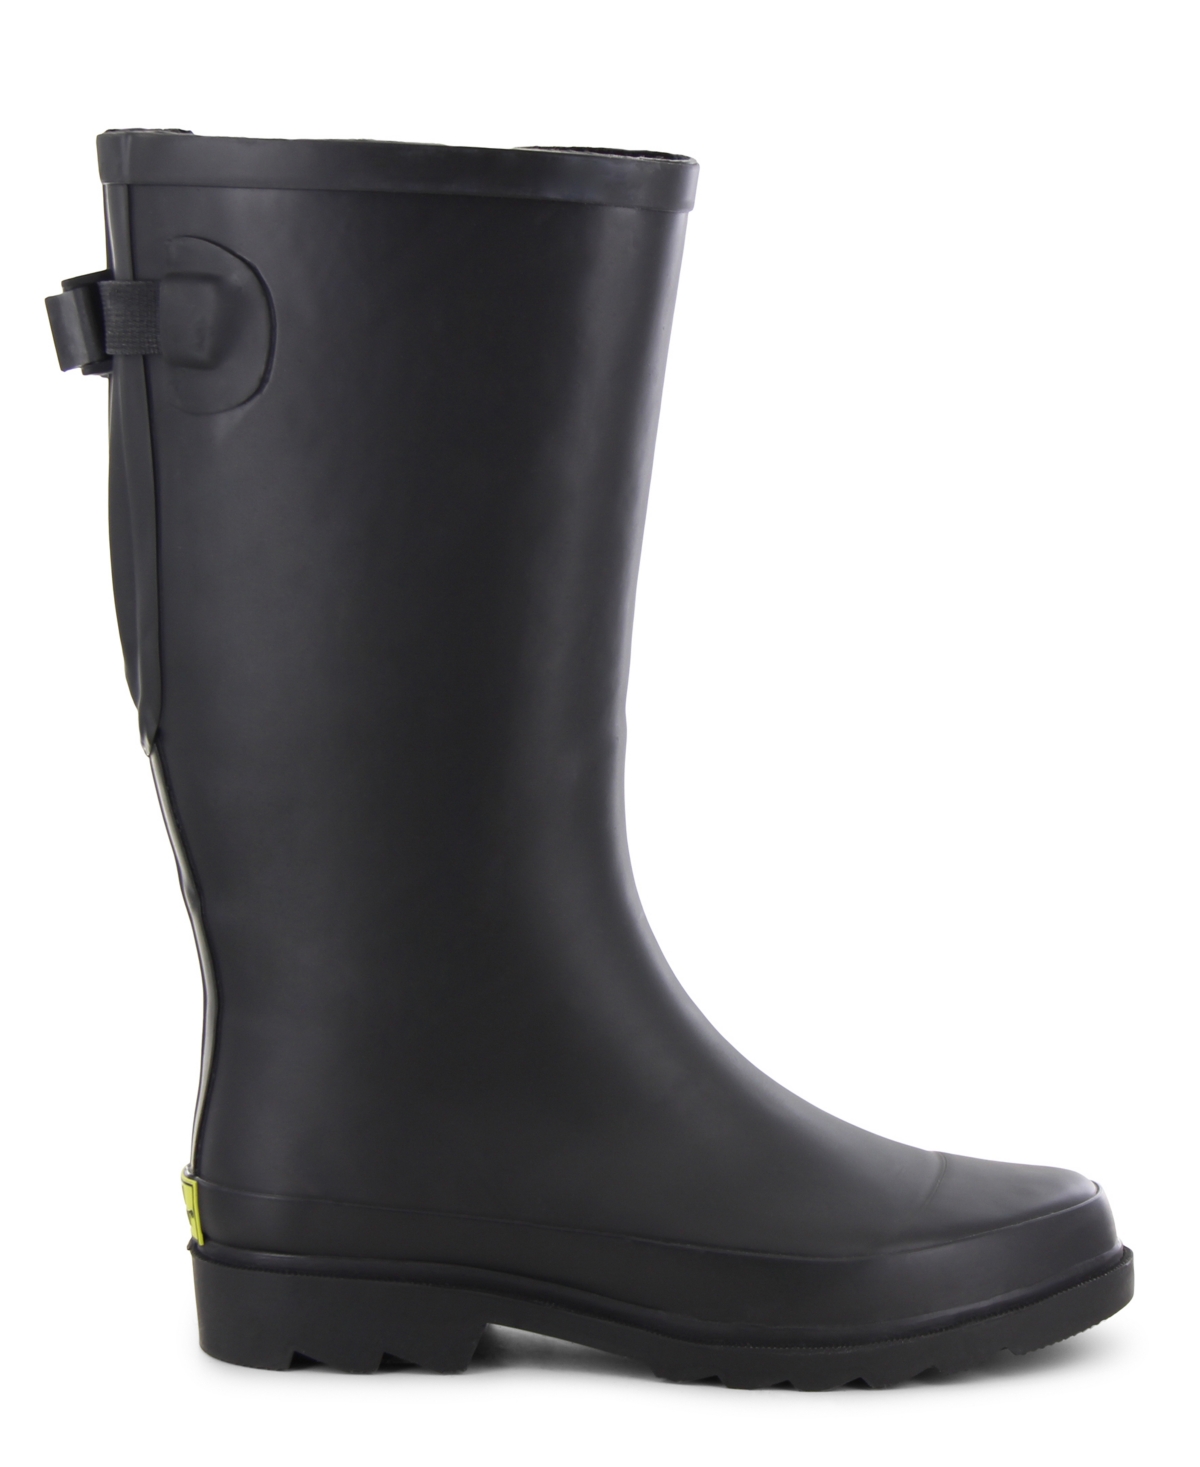 Women's Adjustable Calf Rain Boot - Black